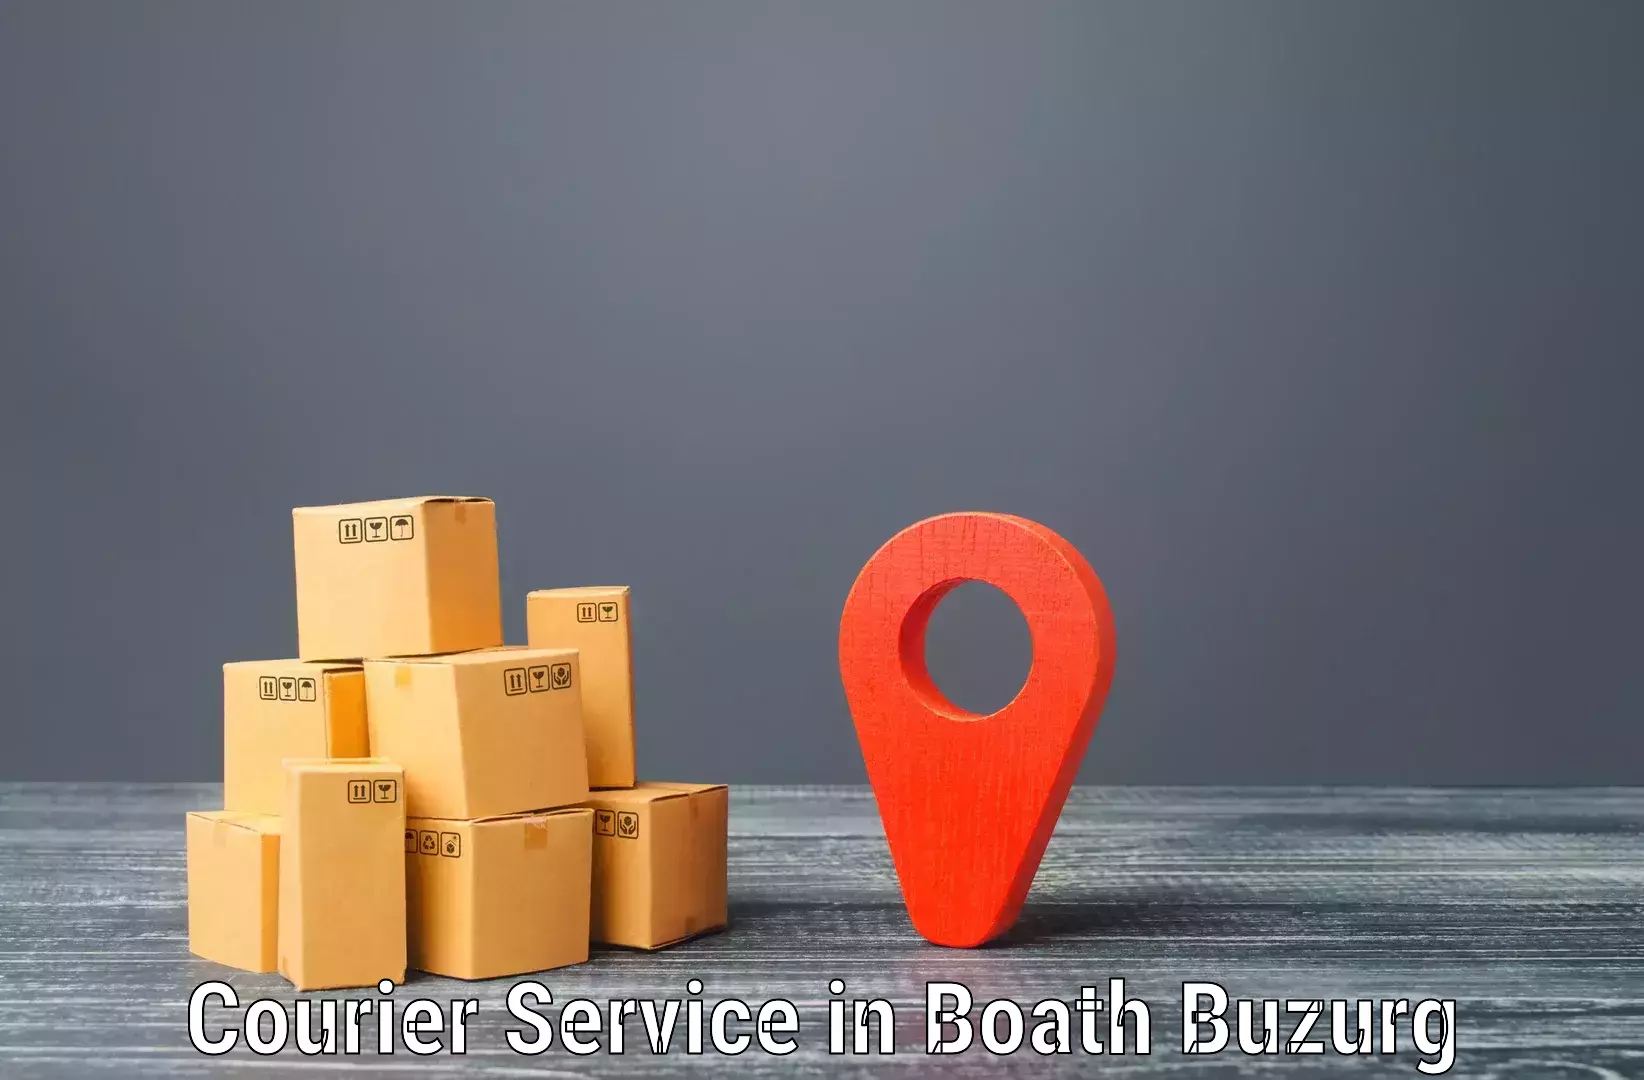 Remote area delivery in Boath Buzurg